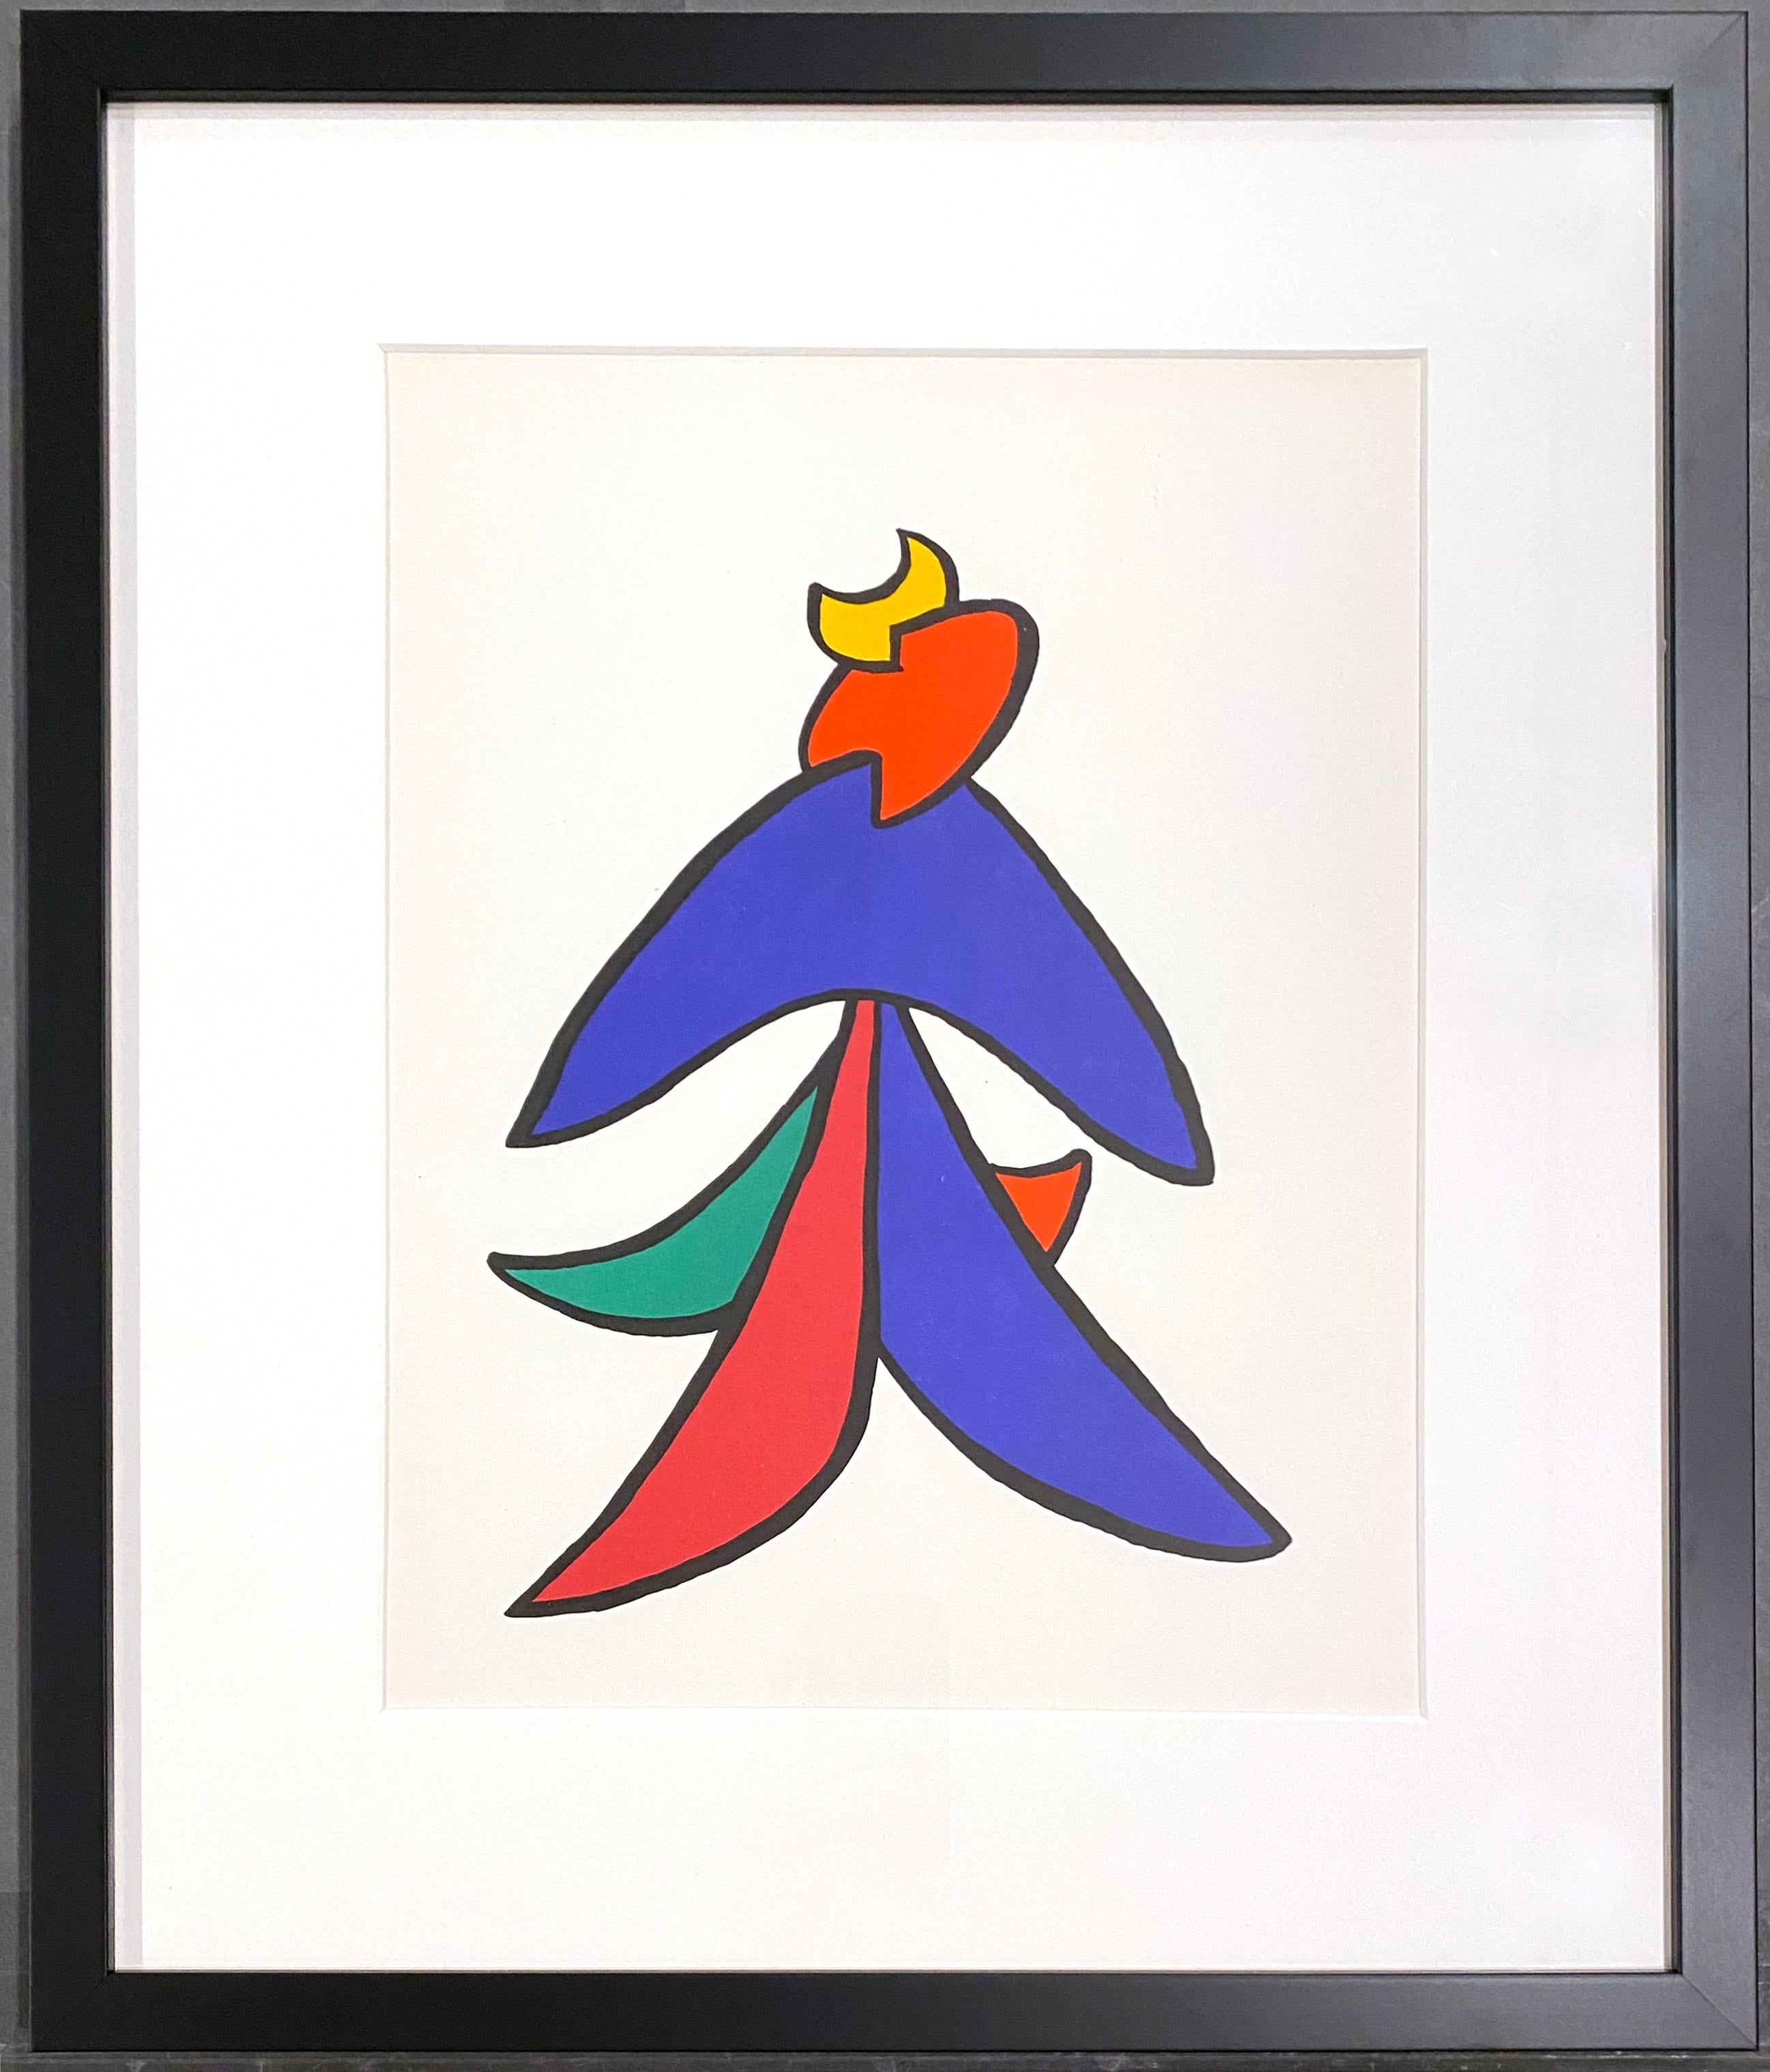 Plate 1, from Derriere le Miroir #141 (Stabiles) - Print by Alexander Calder